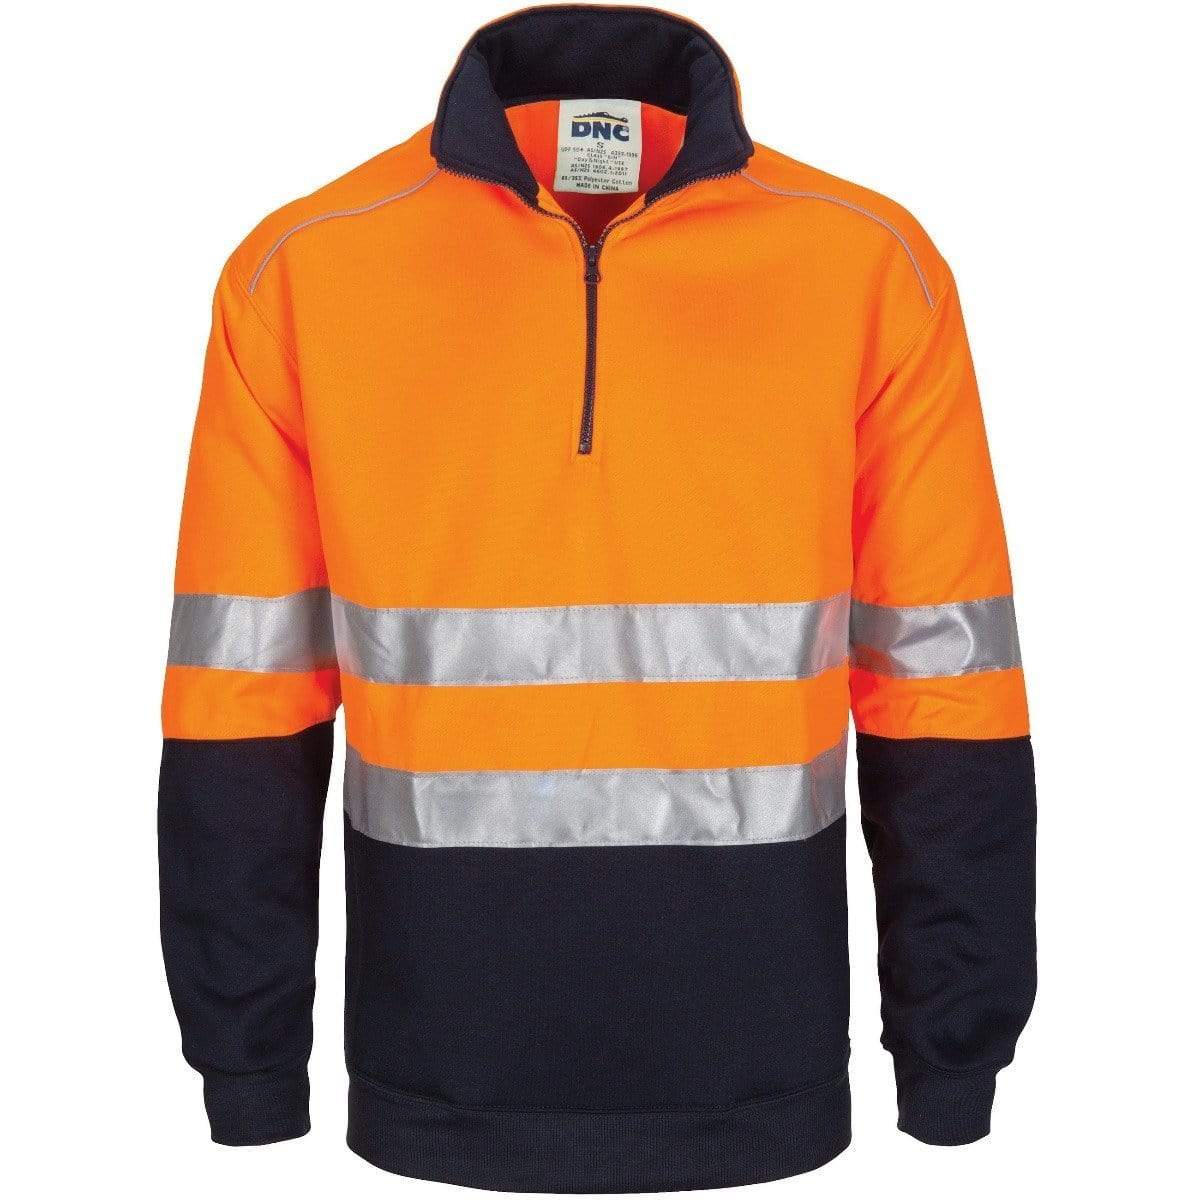 Dnc Workwear Hi-vis 1/2 Zip Fleecy With Hoop Pattern Csr Reflective Tape - 3729 Work Wear DNC Workwear Orange/Navy XS 